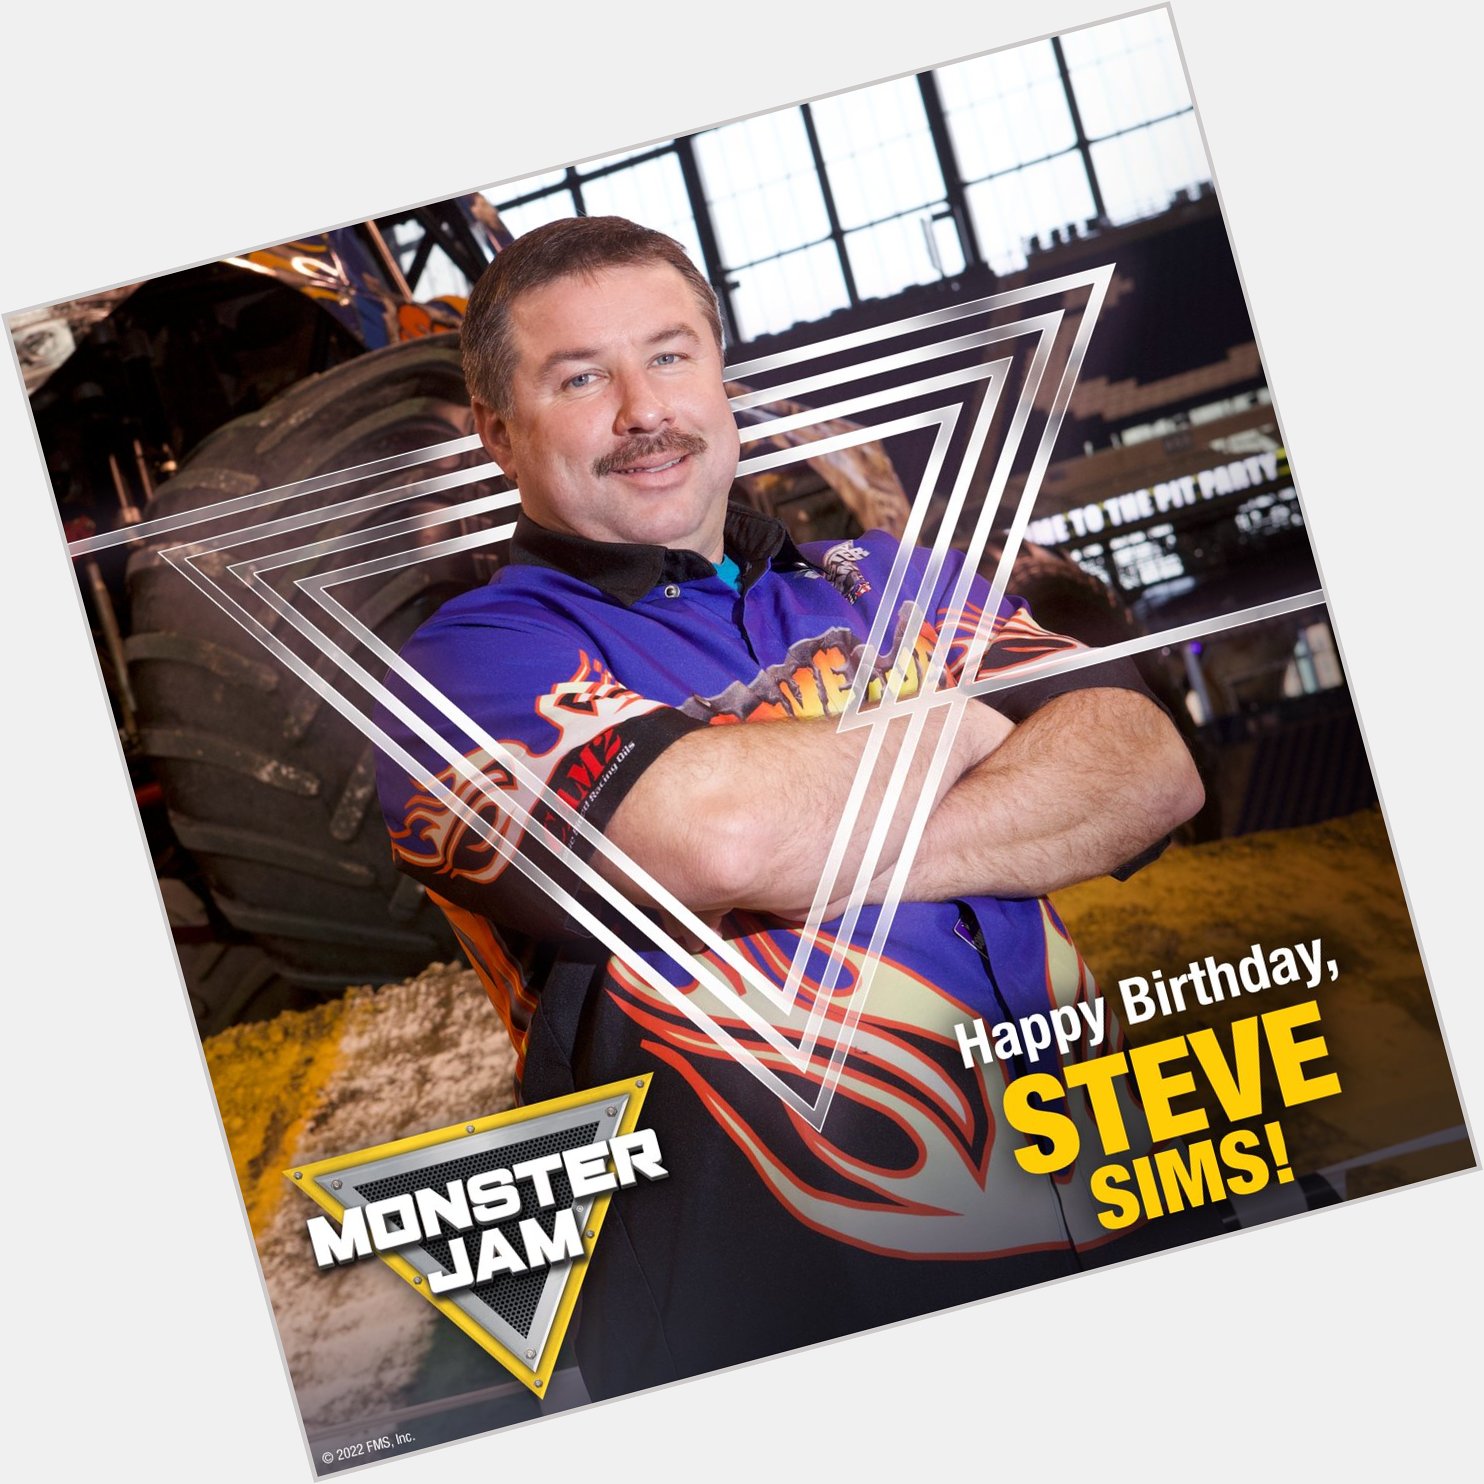 Help us wish Steve Sims a very Happy Birthday!  